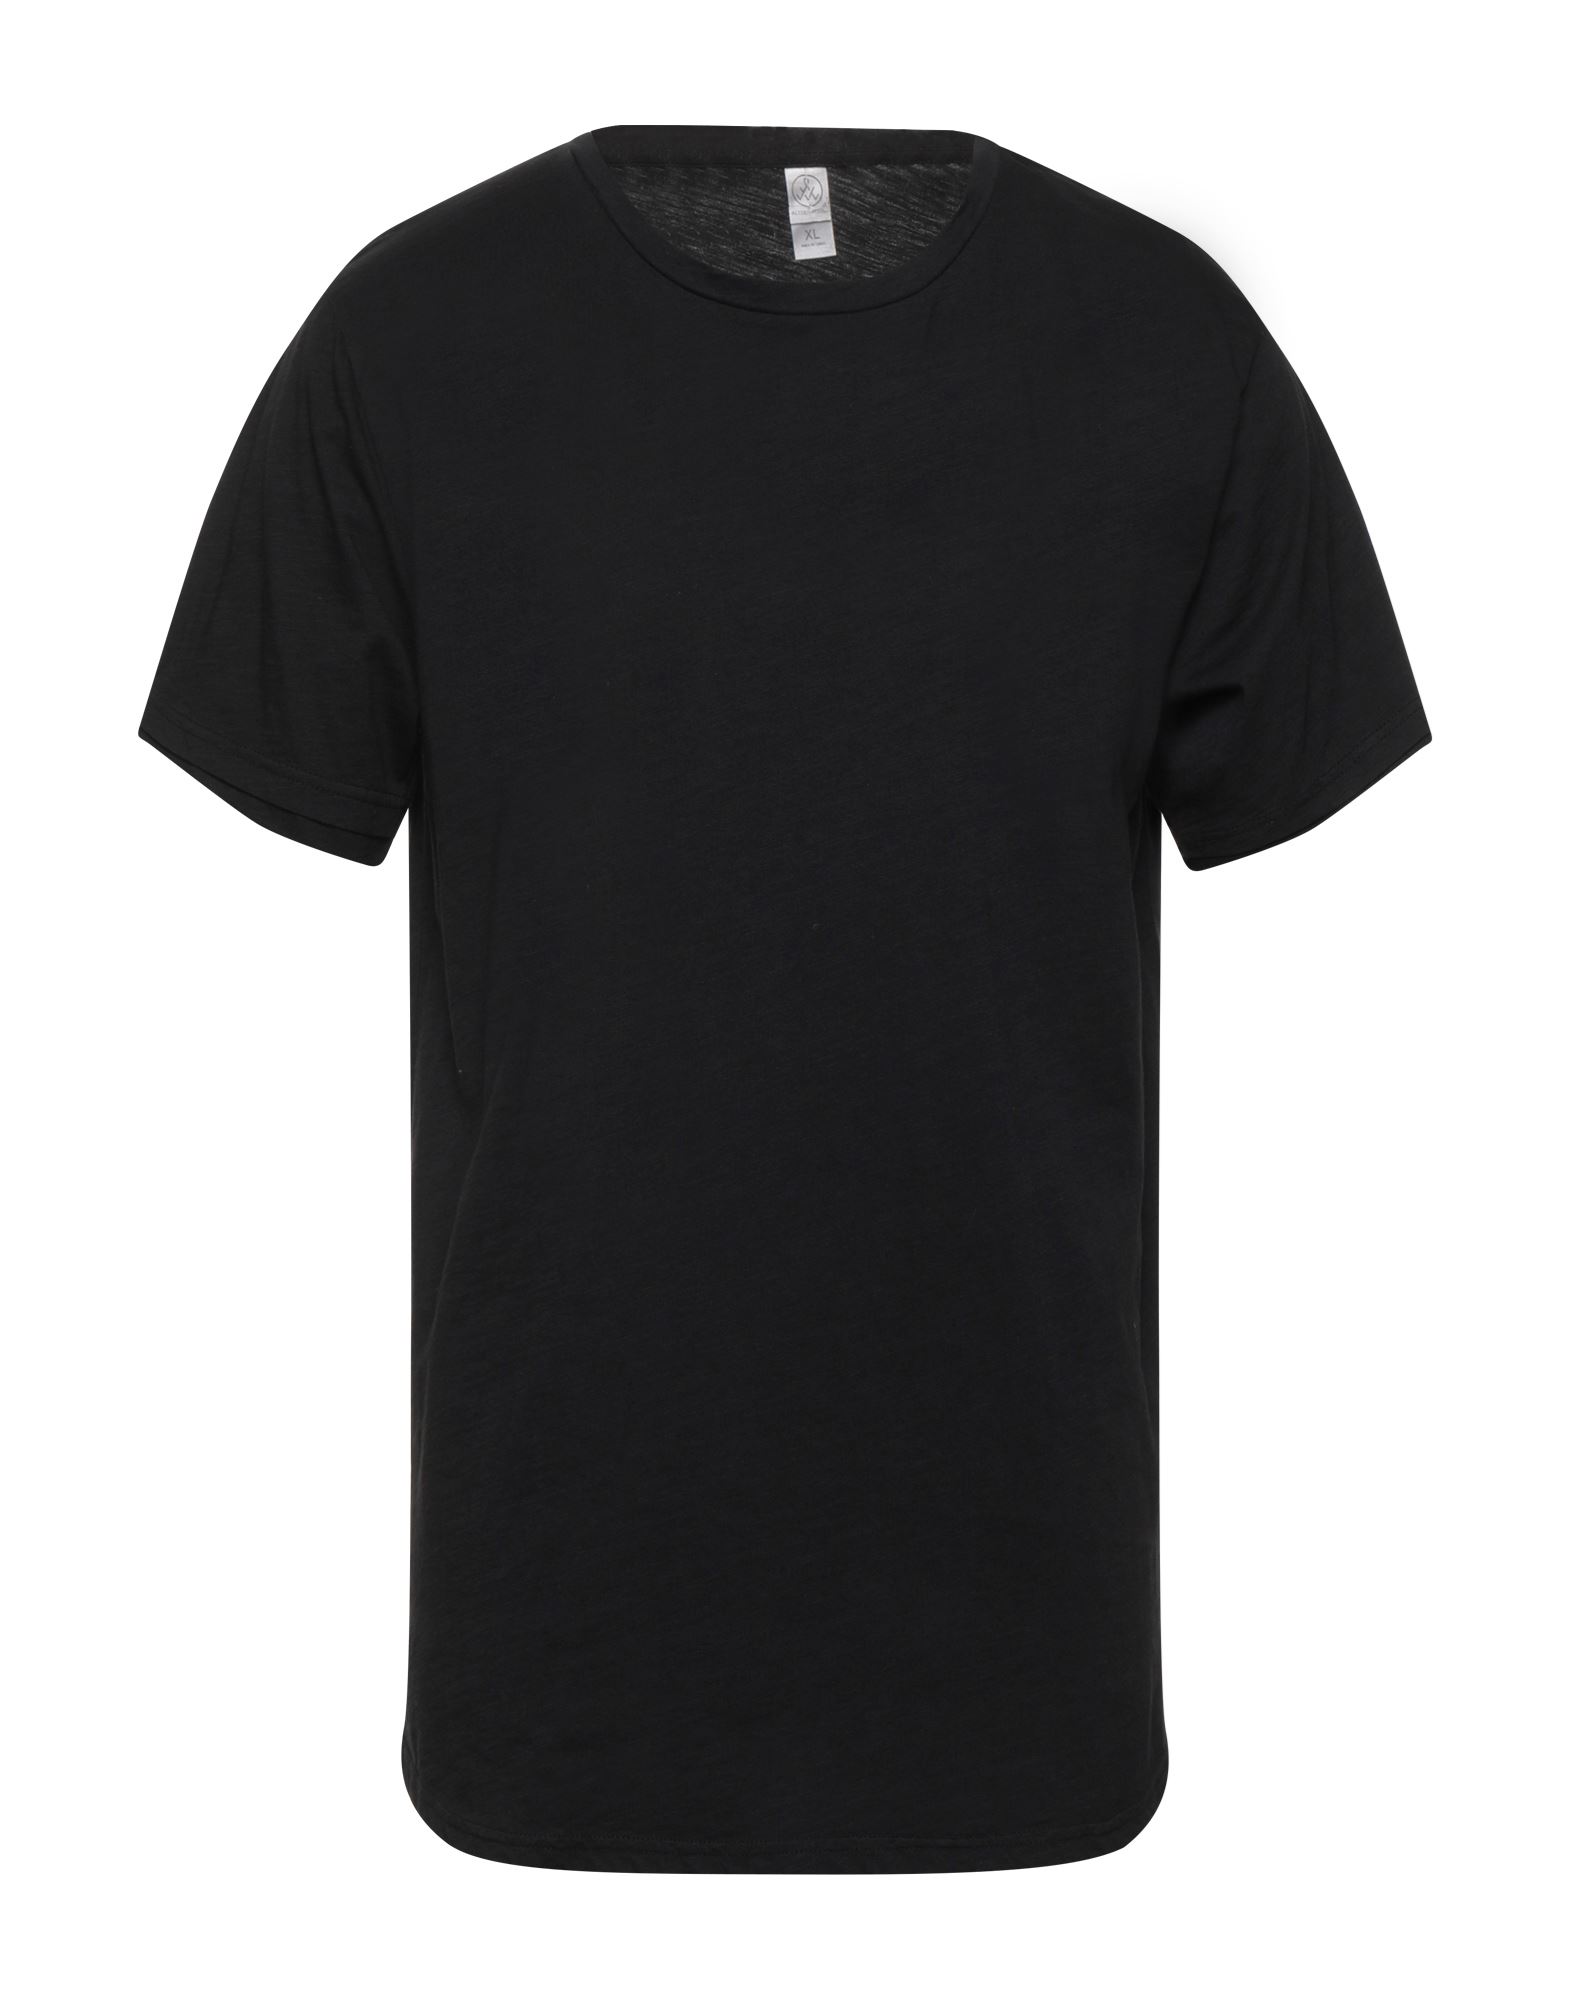 Alternative Man T-shirt Black Size S Cotton